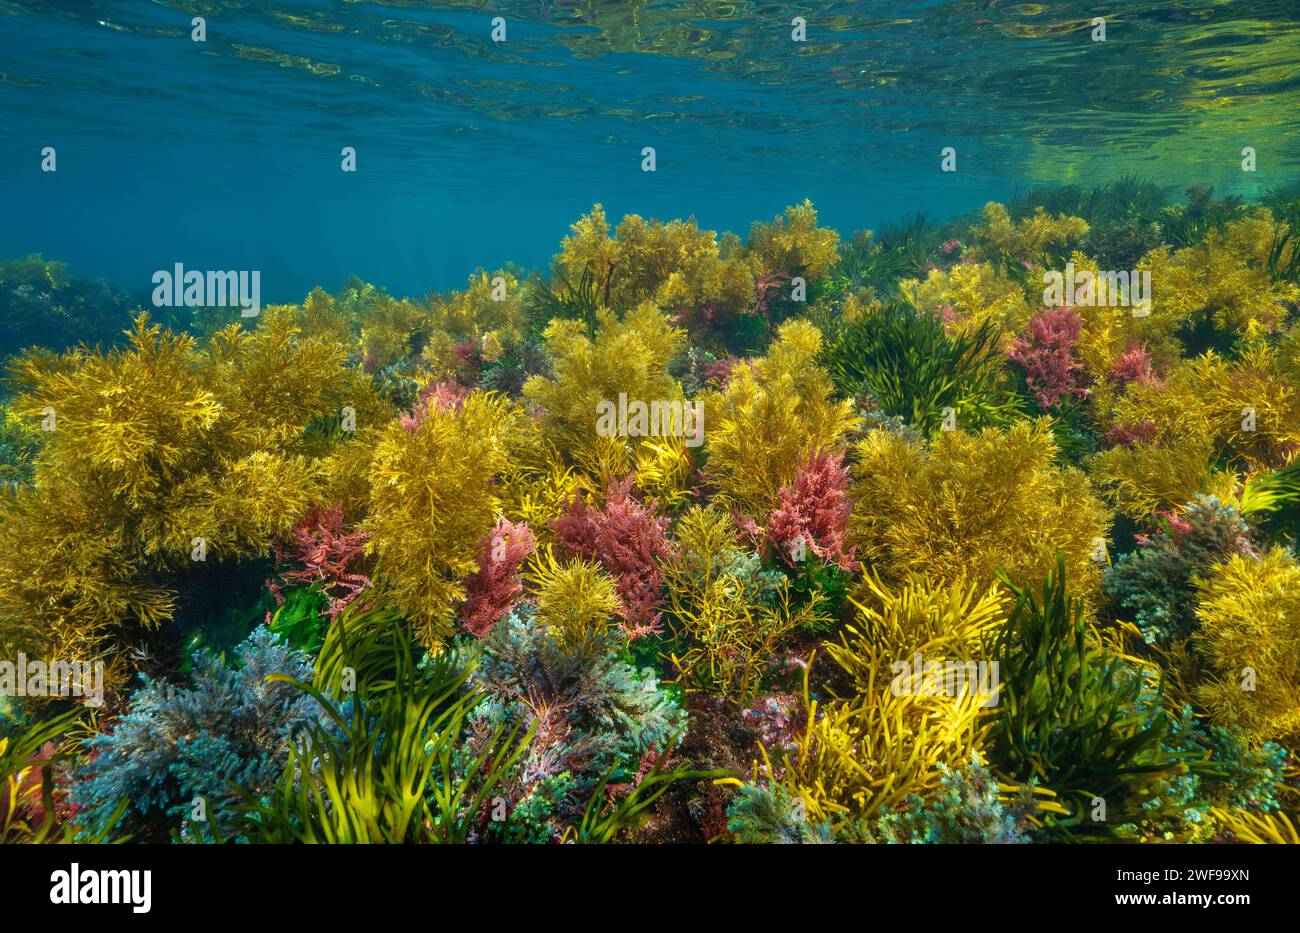 Alghe marine colorate sott'acqua nell'oceano in acque poco profonde, scenario naturale, Atlantico orientale, Spagna, Galizia, Rias Baixas Foto Stock